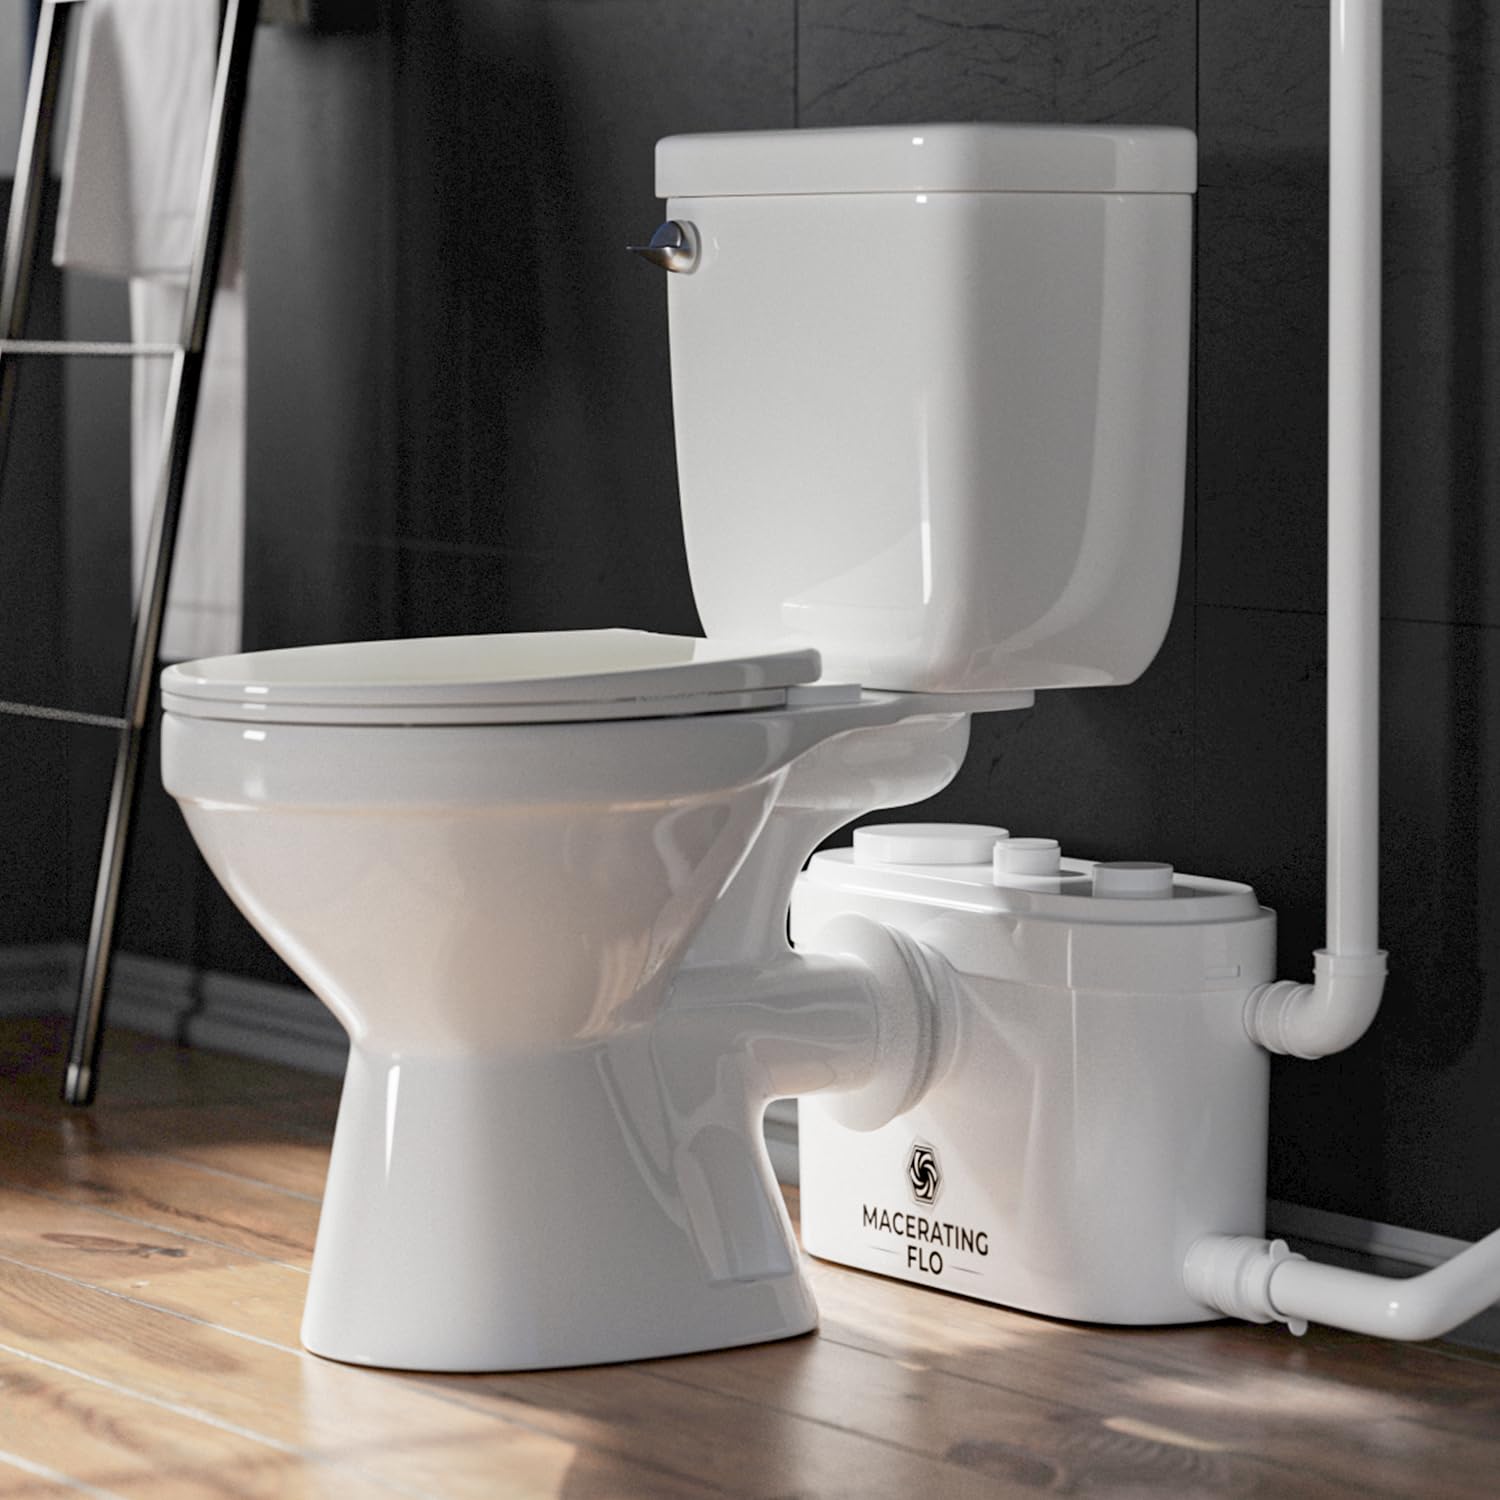 Ultra 750W Macerating Toilet System